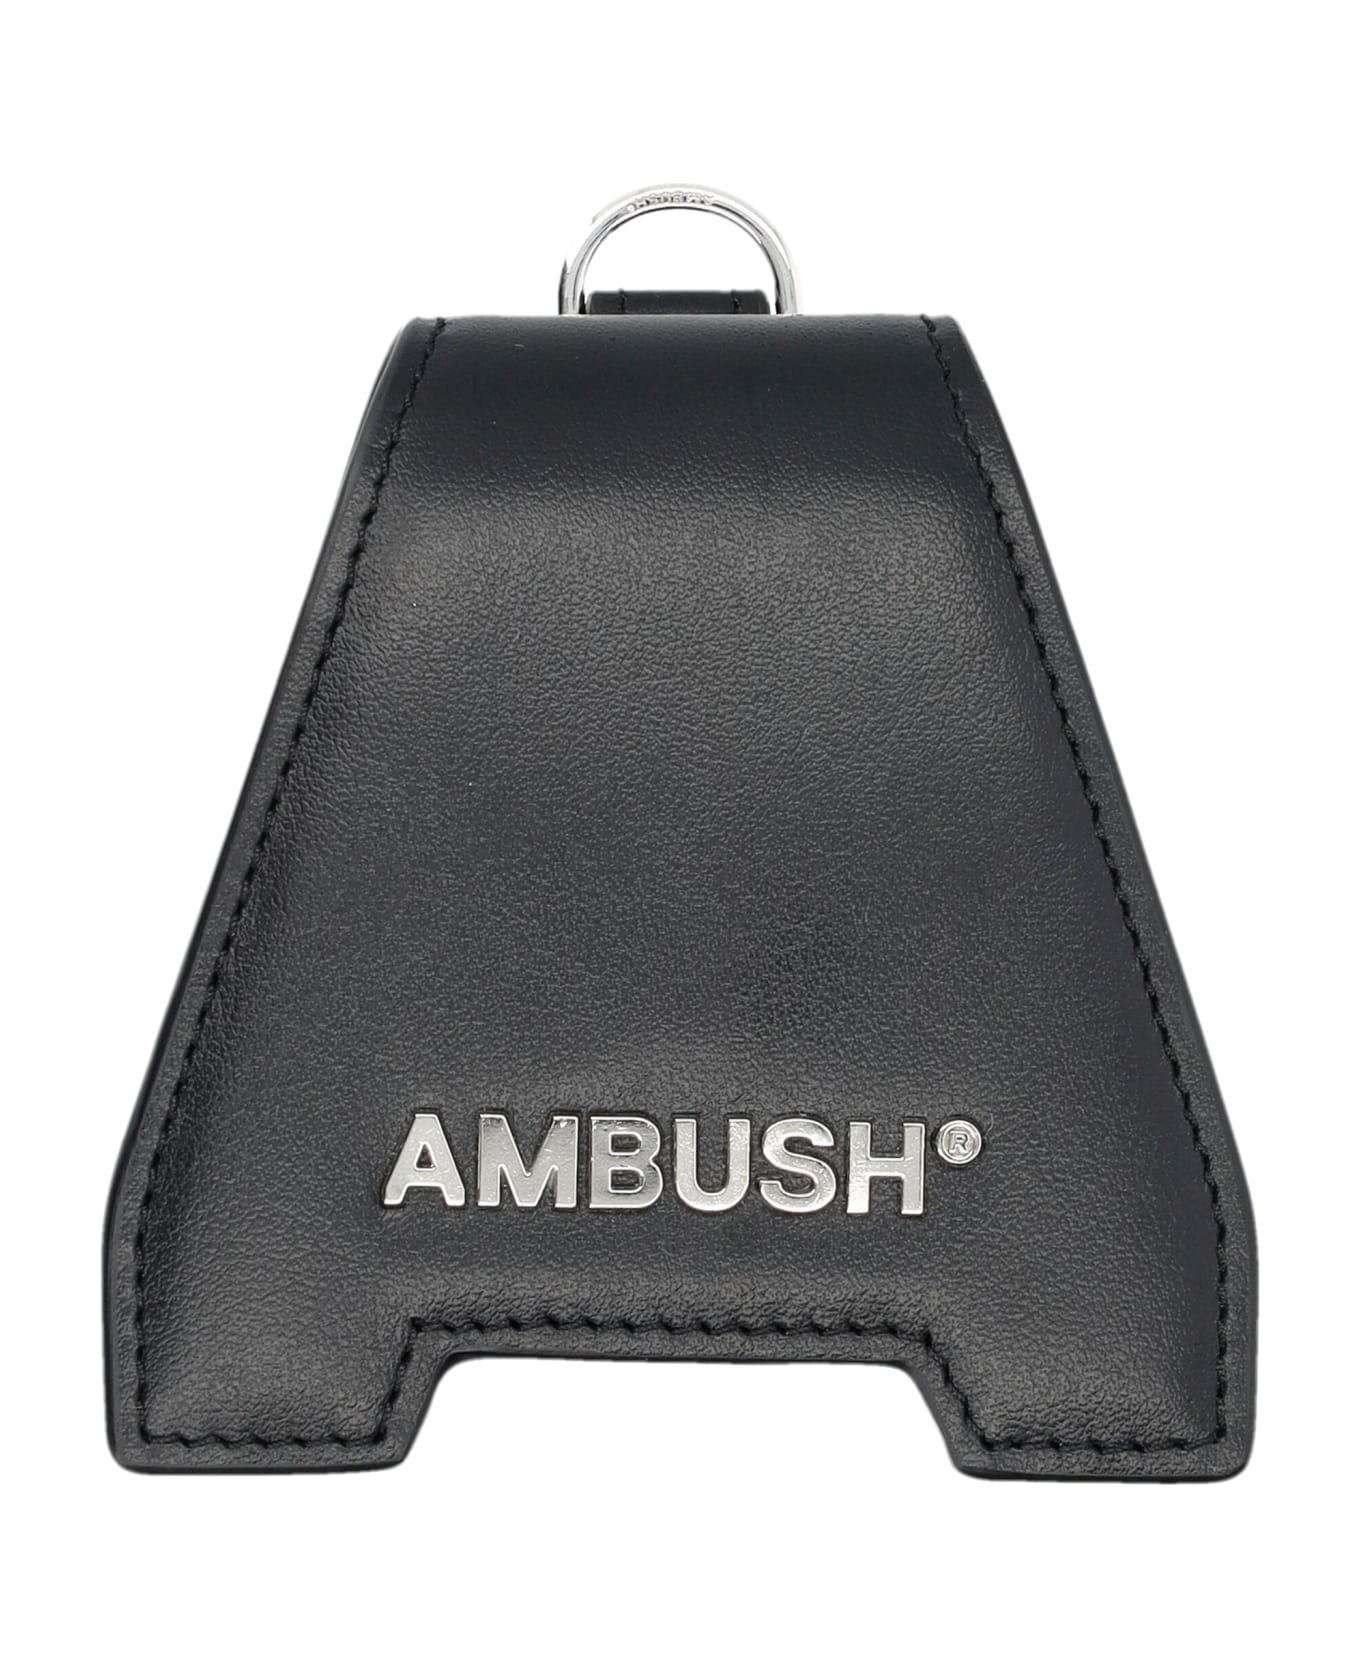 AMBUSH 'a' Flap Airpods Case - BLACK デジタルアクセサリー